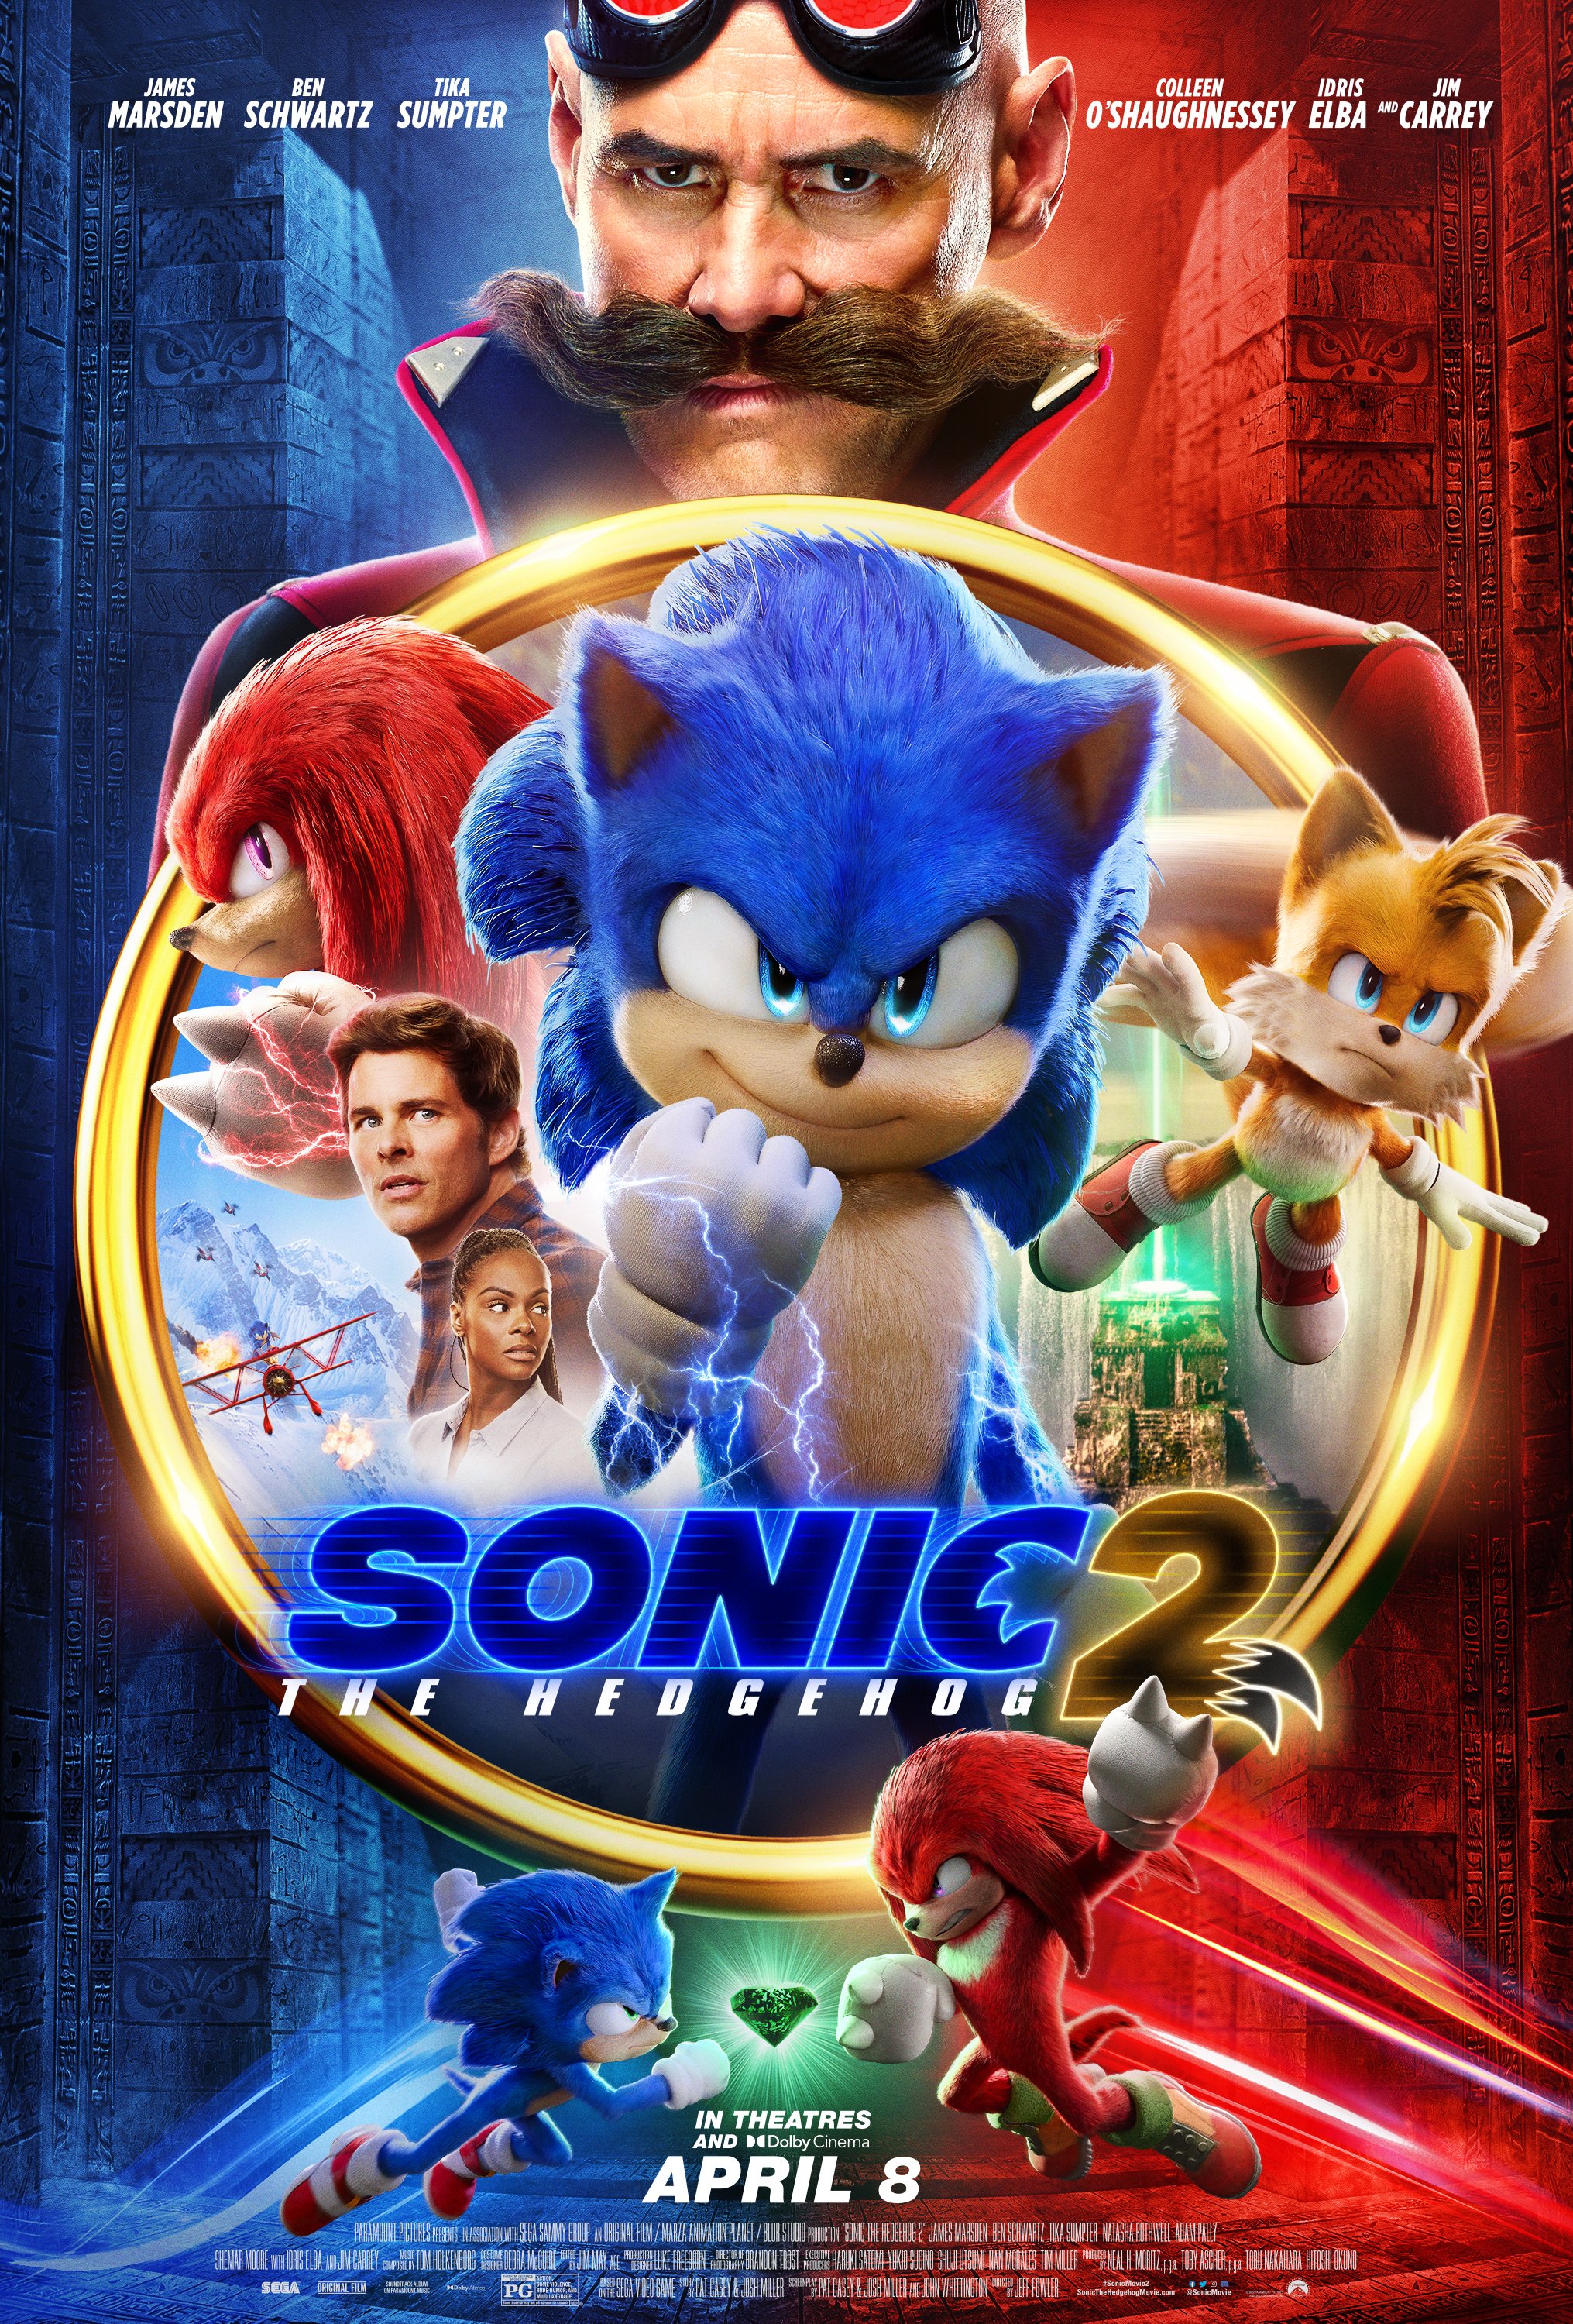 15 Sonic The Hedgehog Fan Games For Sega Fans